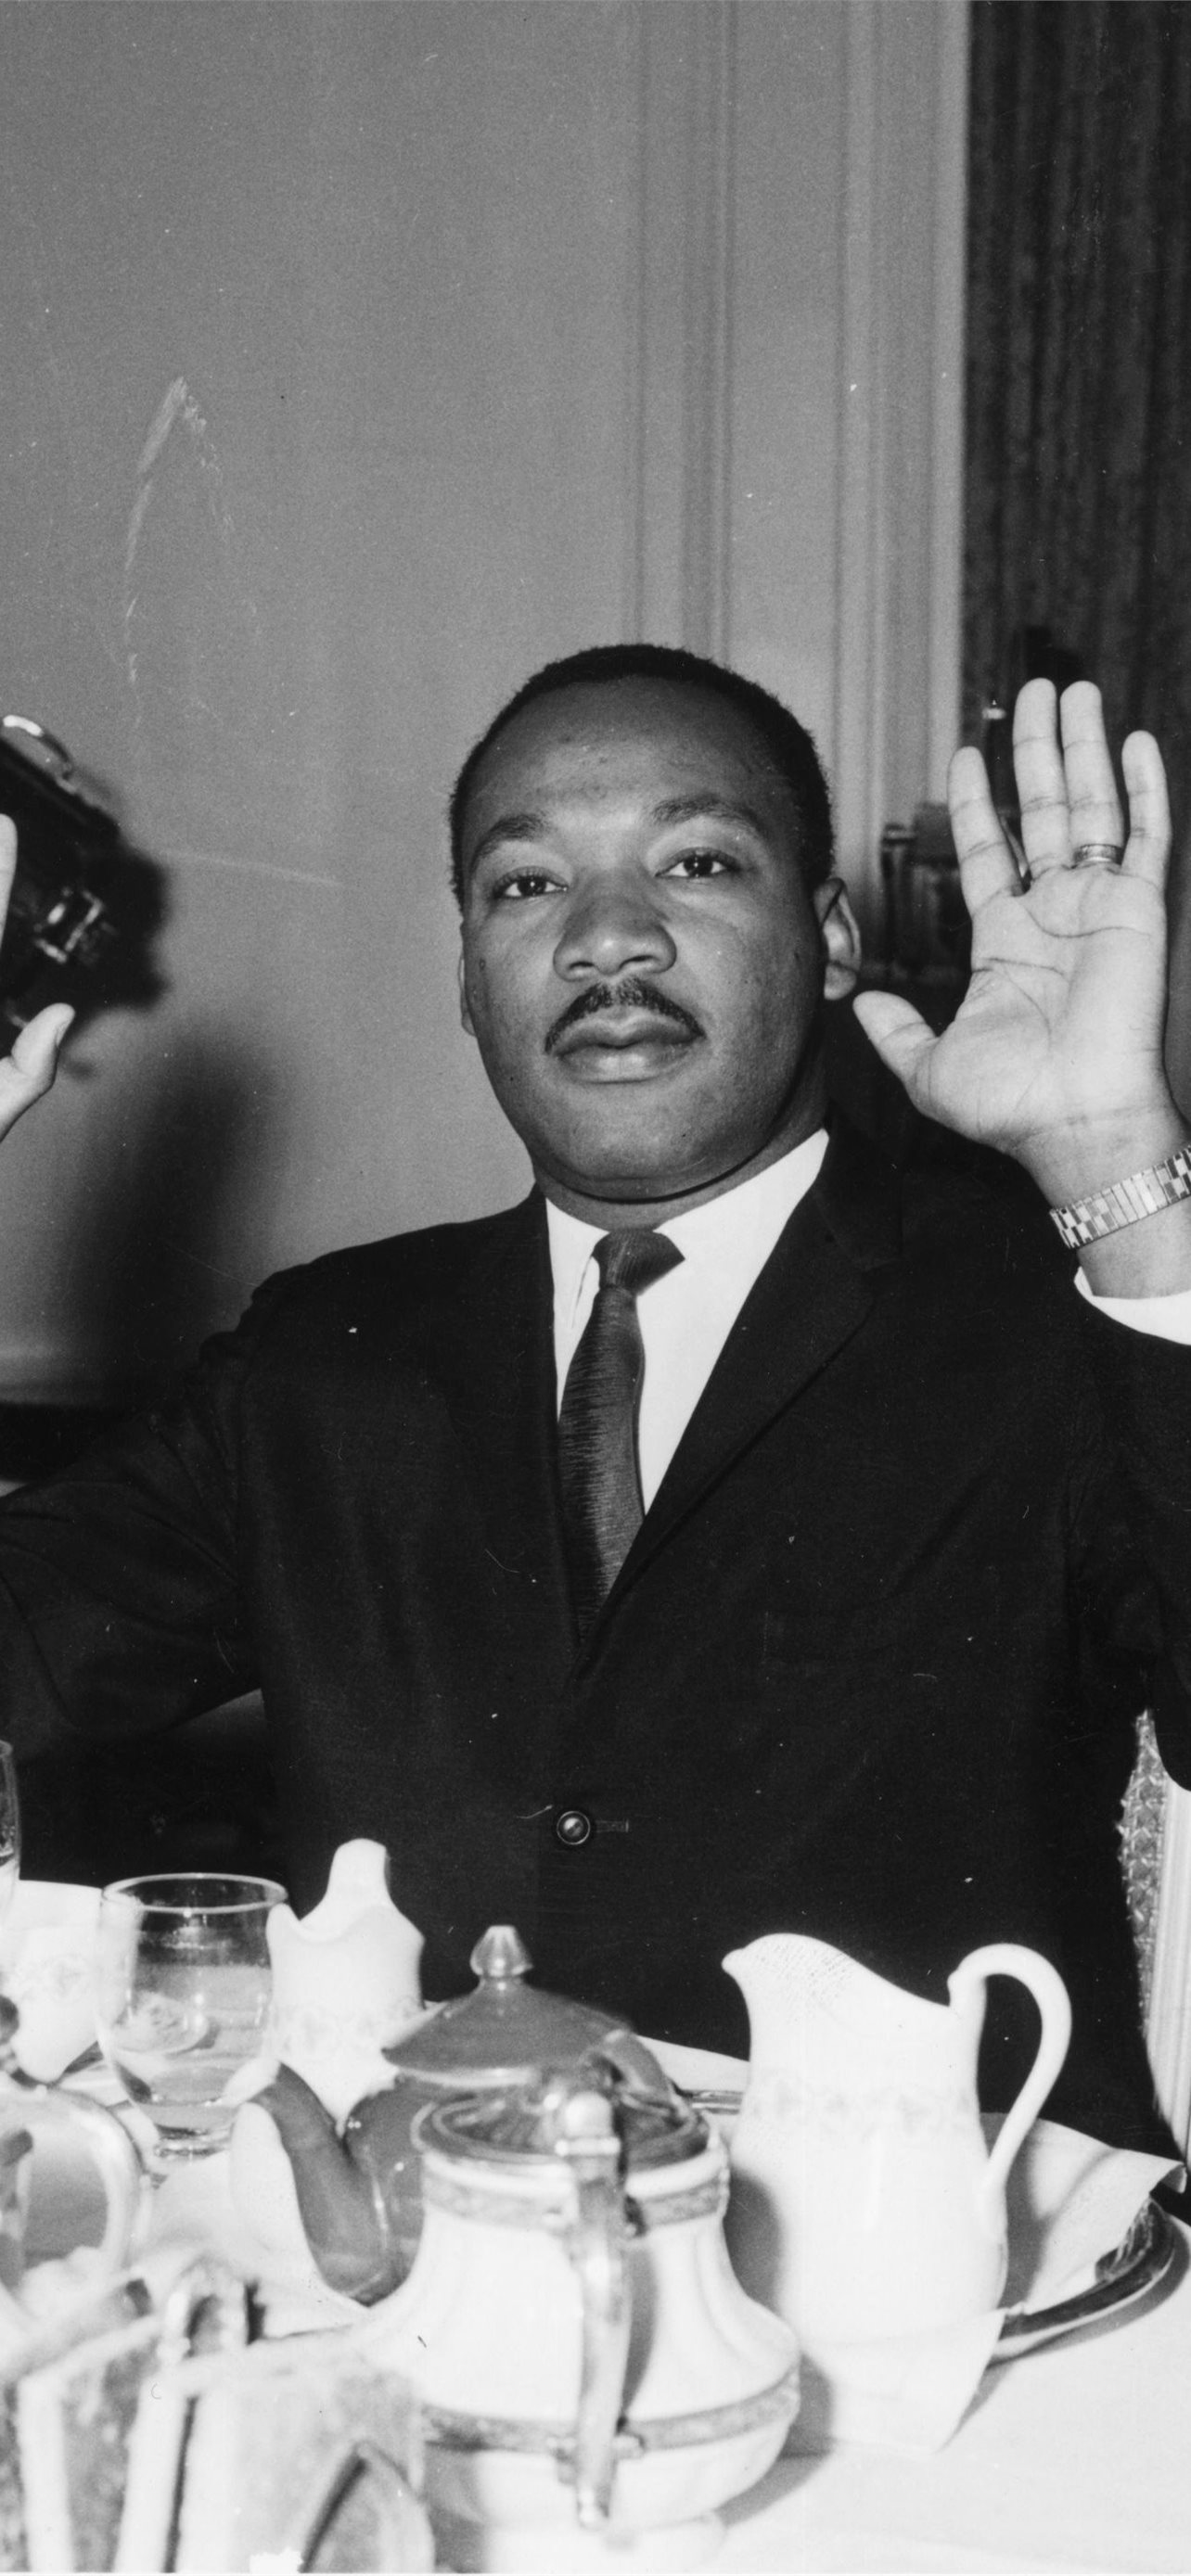 Martin Luther King Jr Day Wallpaper Background Image 1 for your Desktop